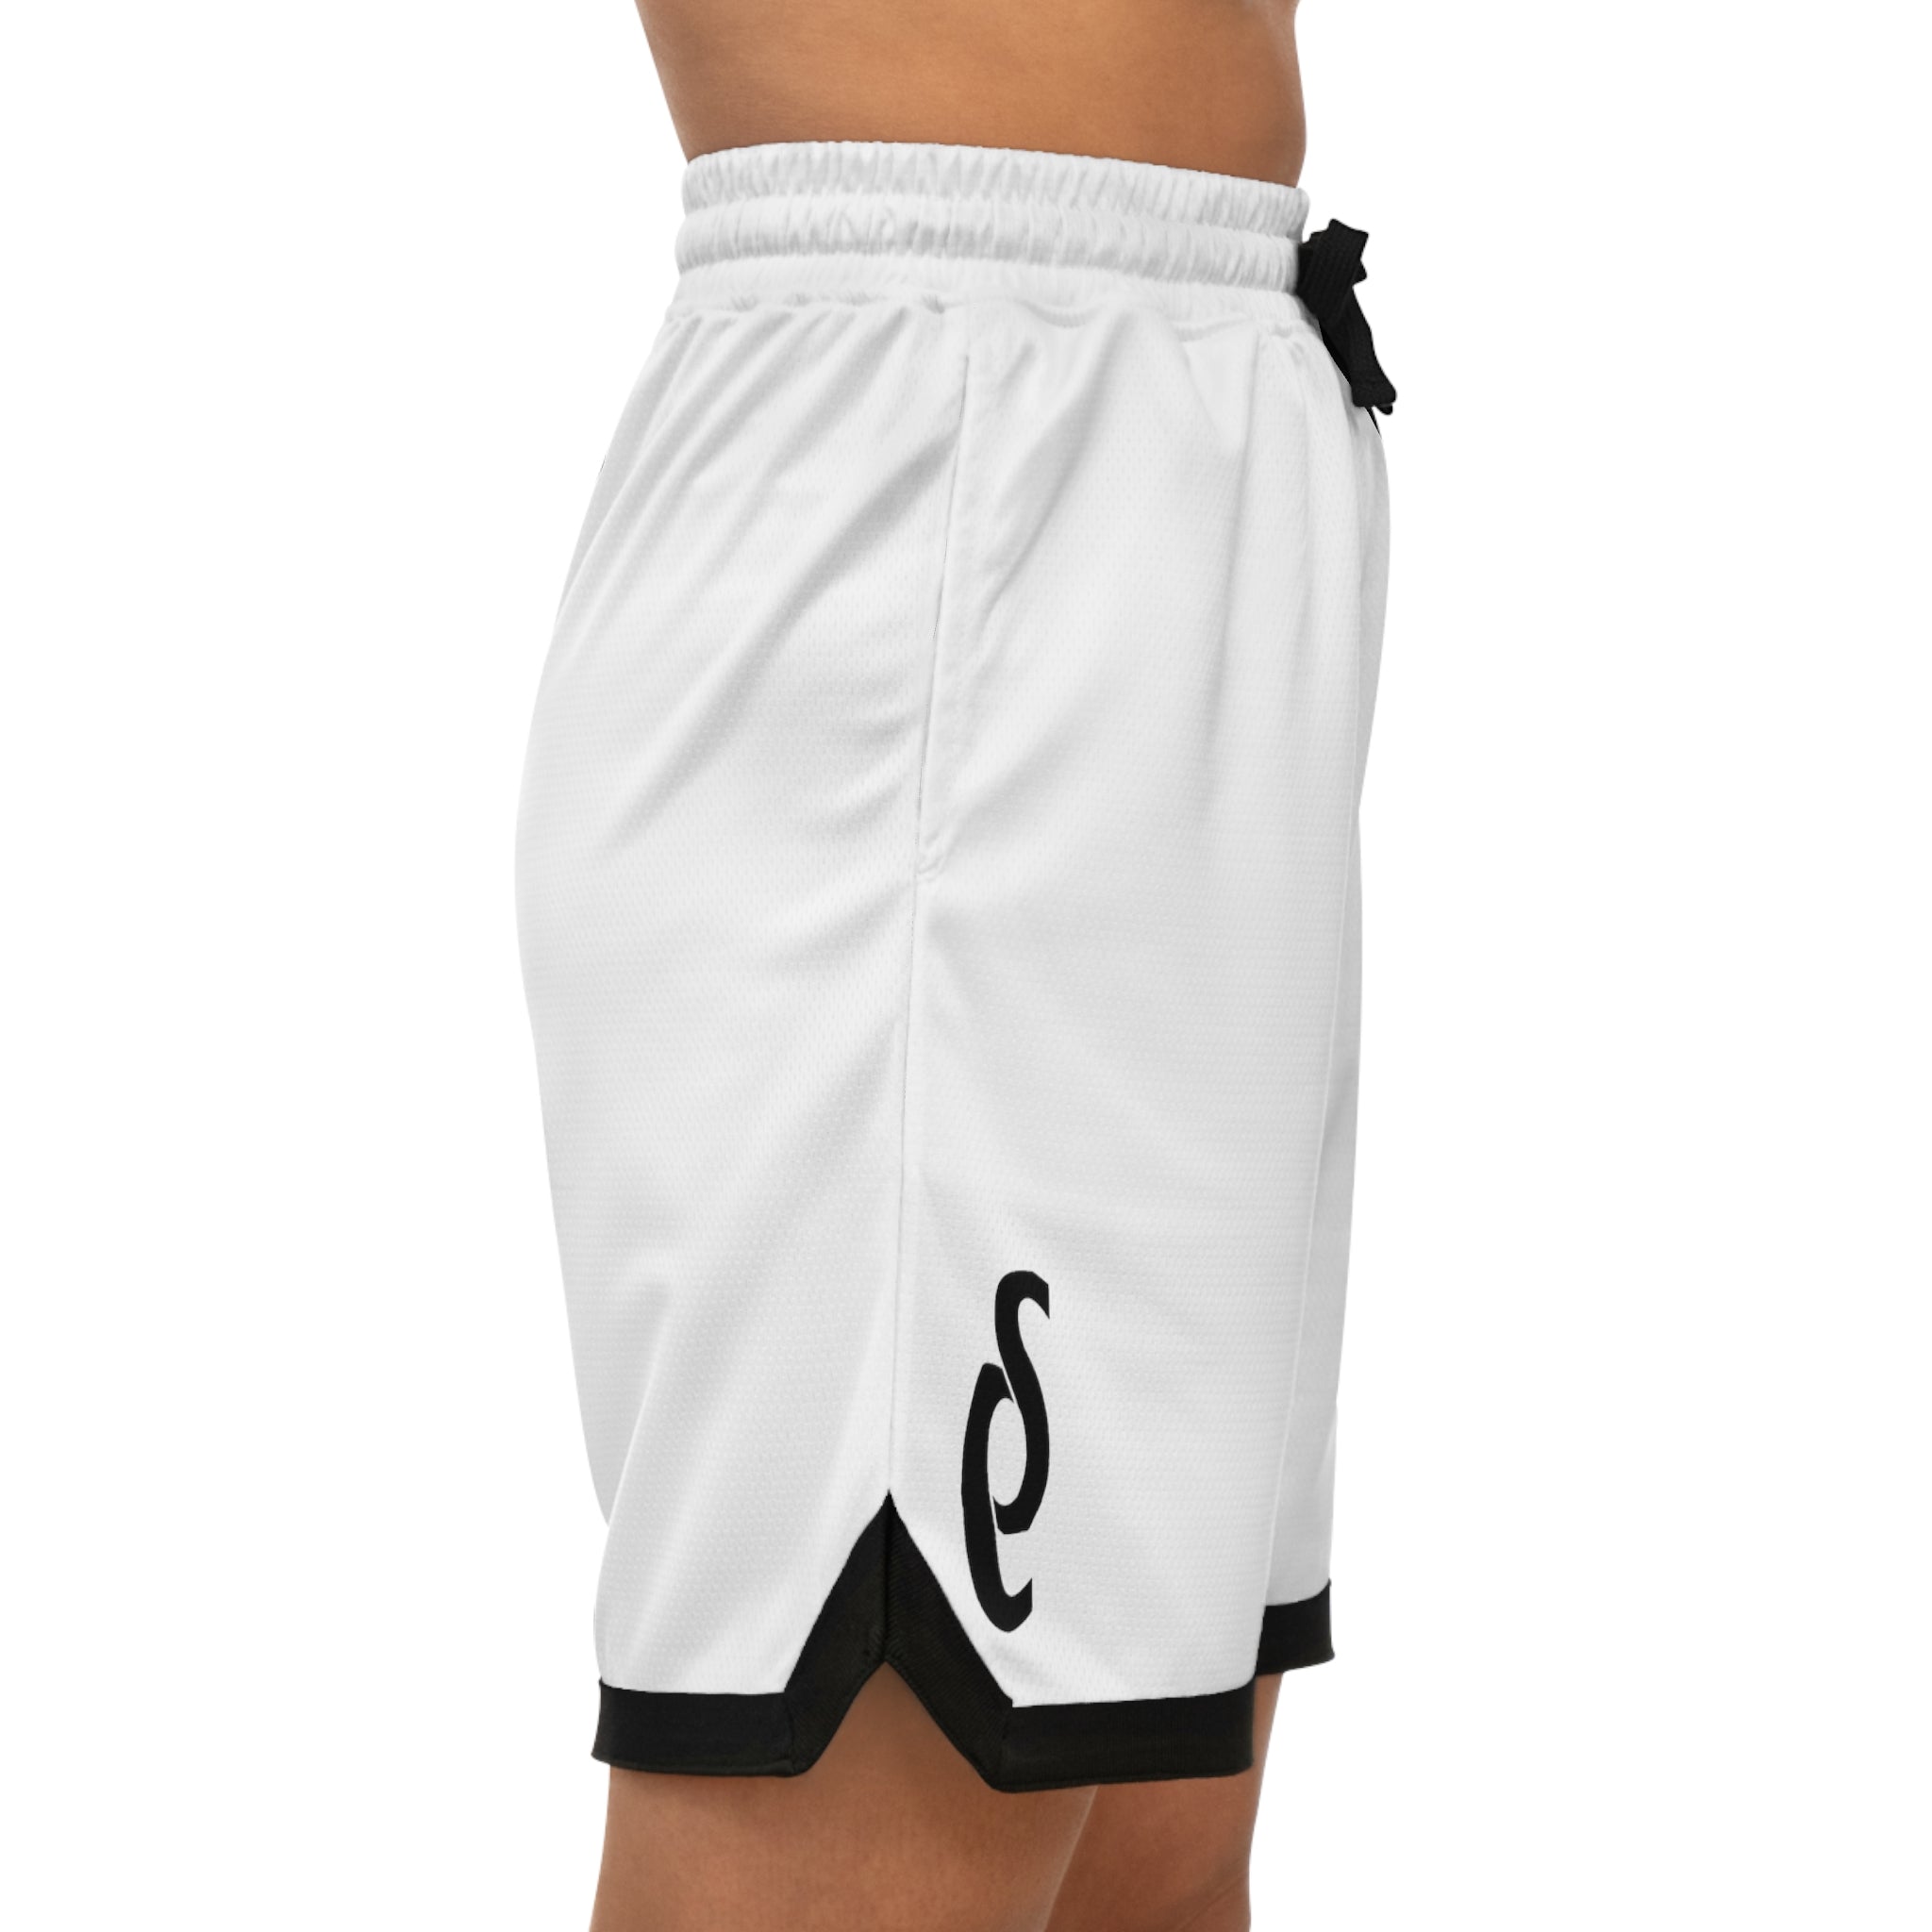 Basketball Rib Shorts (AOP) - SPEED OF CHOICE® 